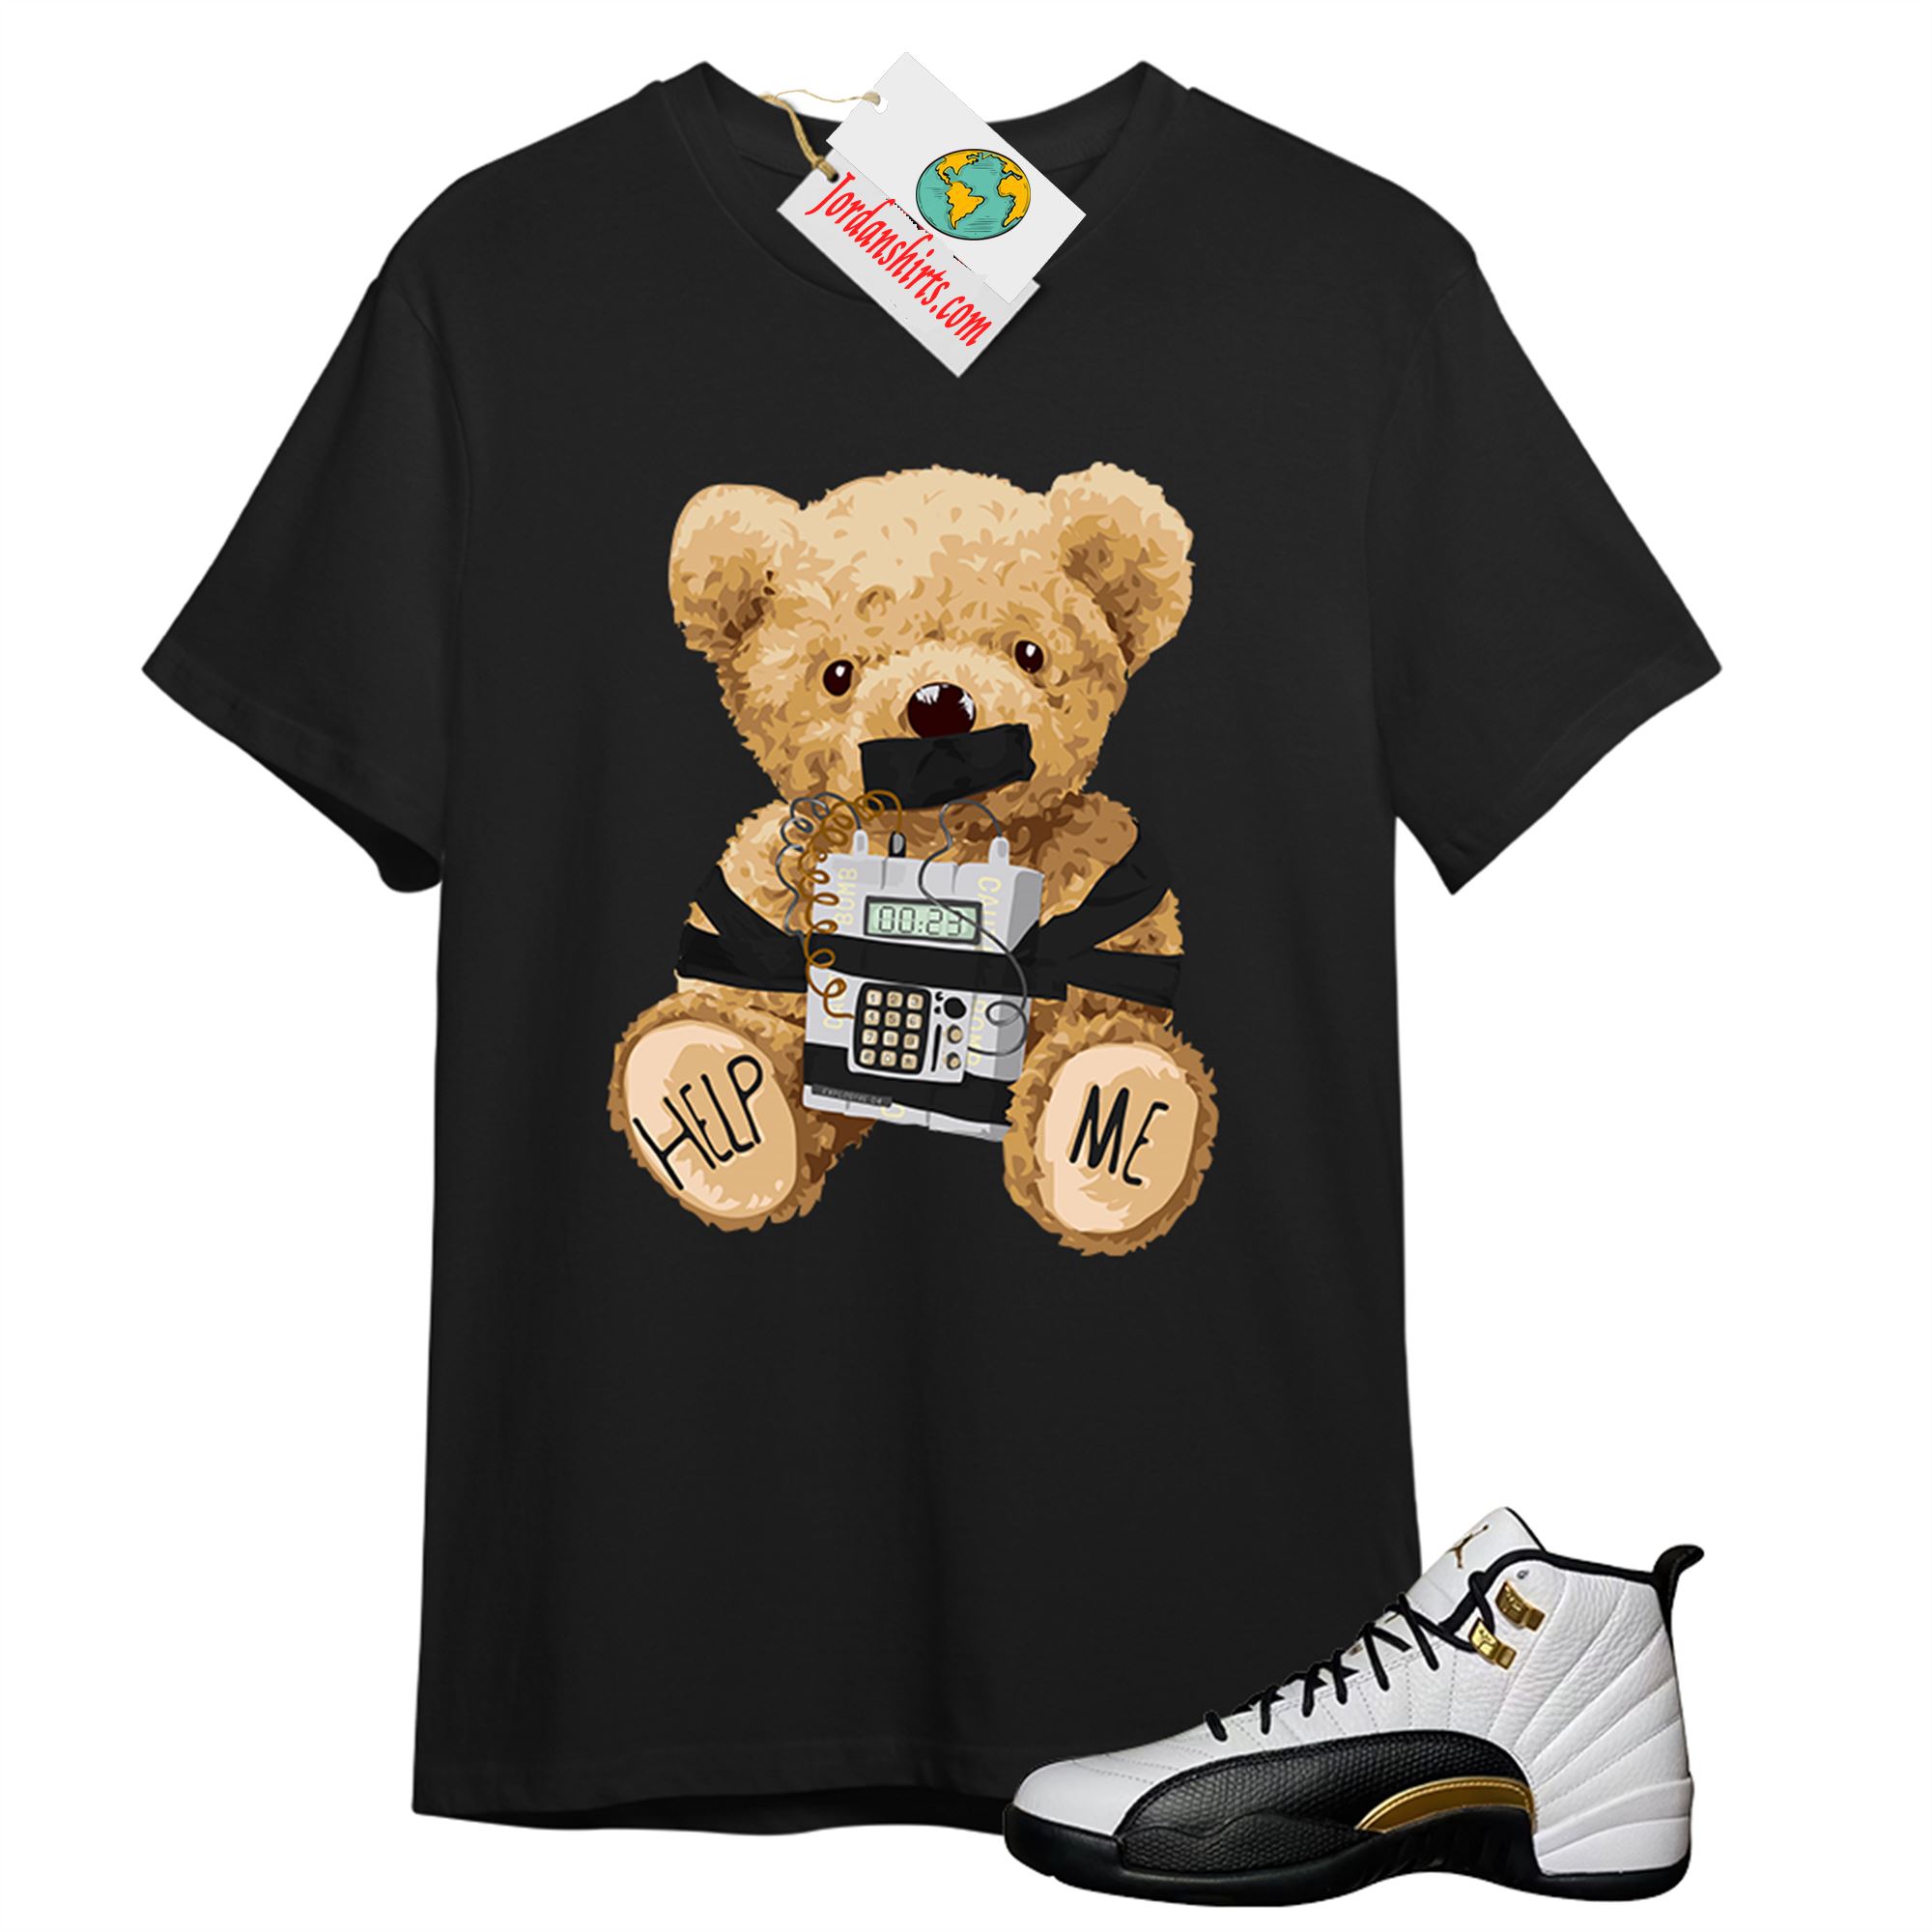 Jordan 12 Shirt, Teddy Bear Bomb Black T-shirt Air Jordan 12 Royalty 12s Size Up To 5xl